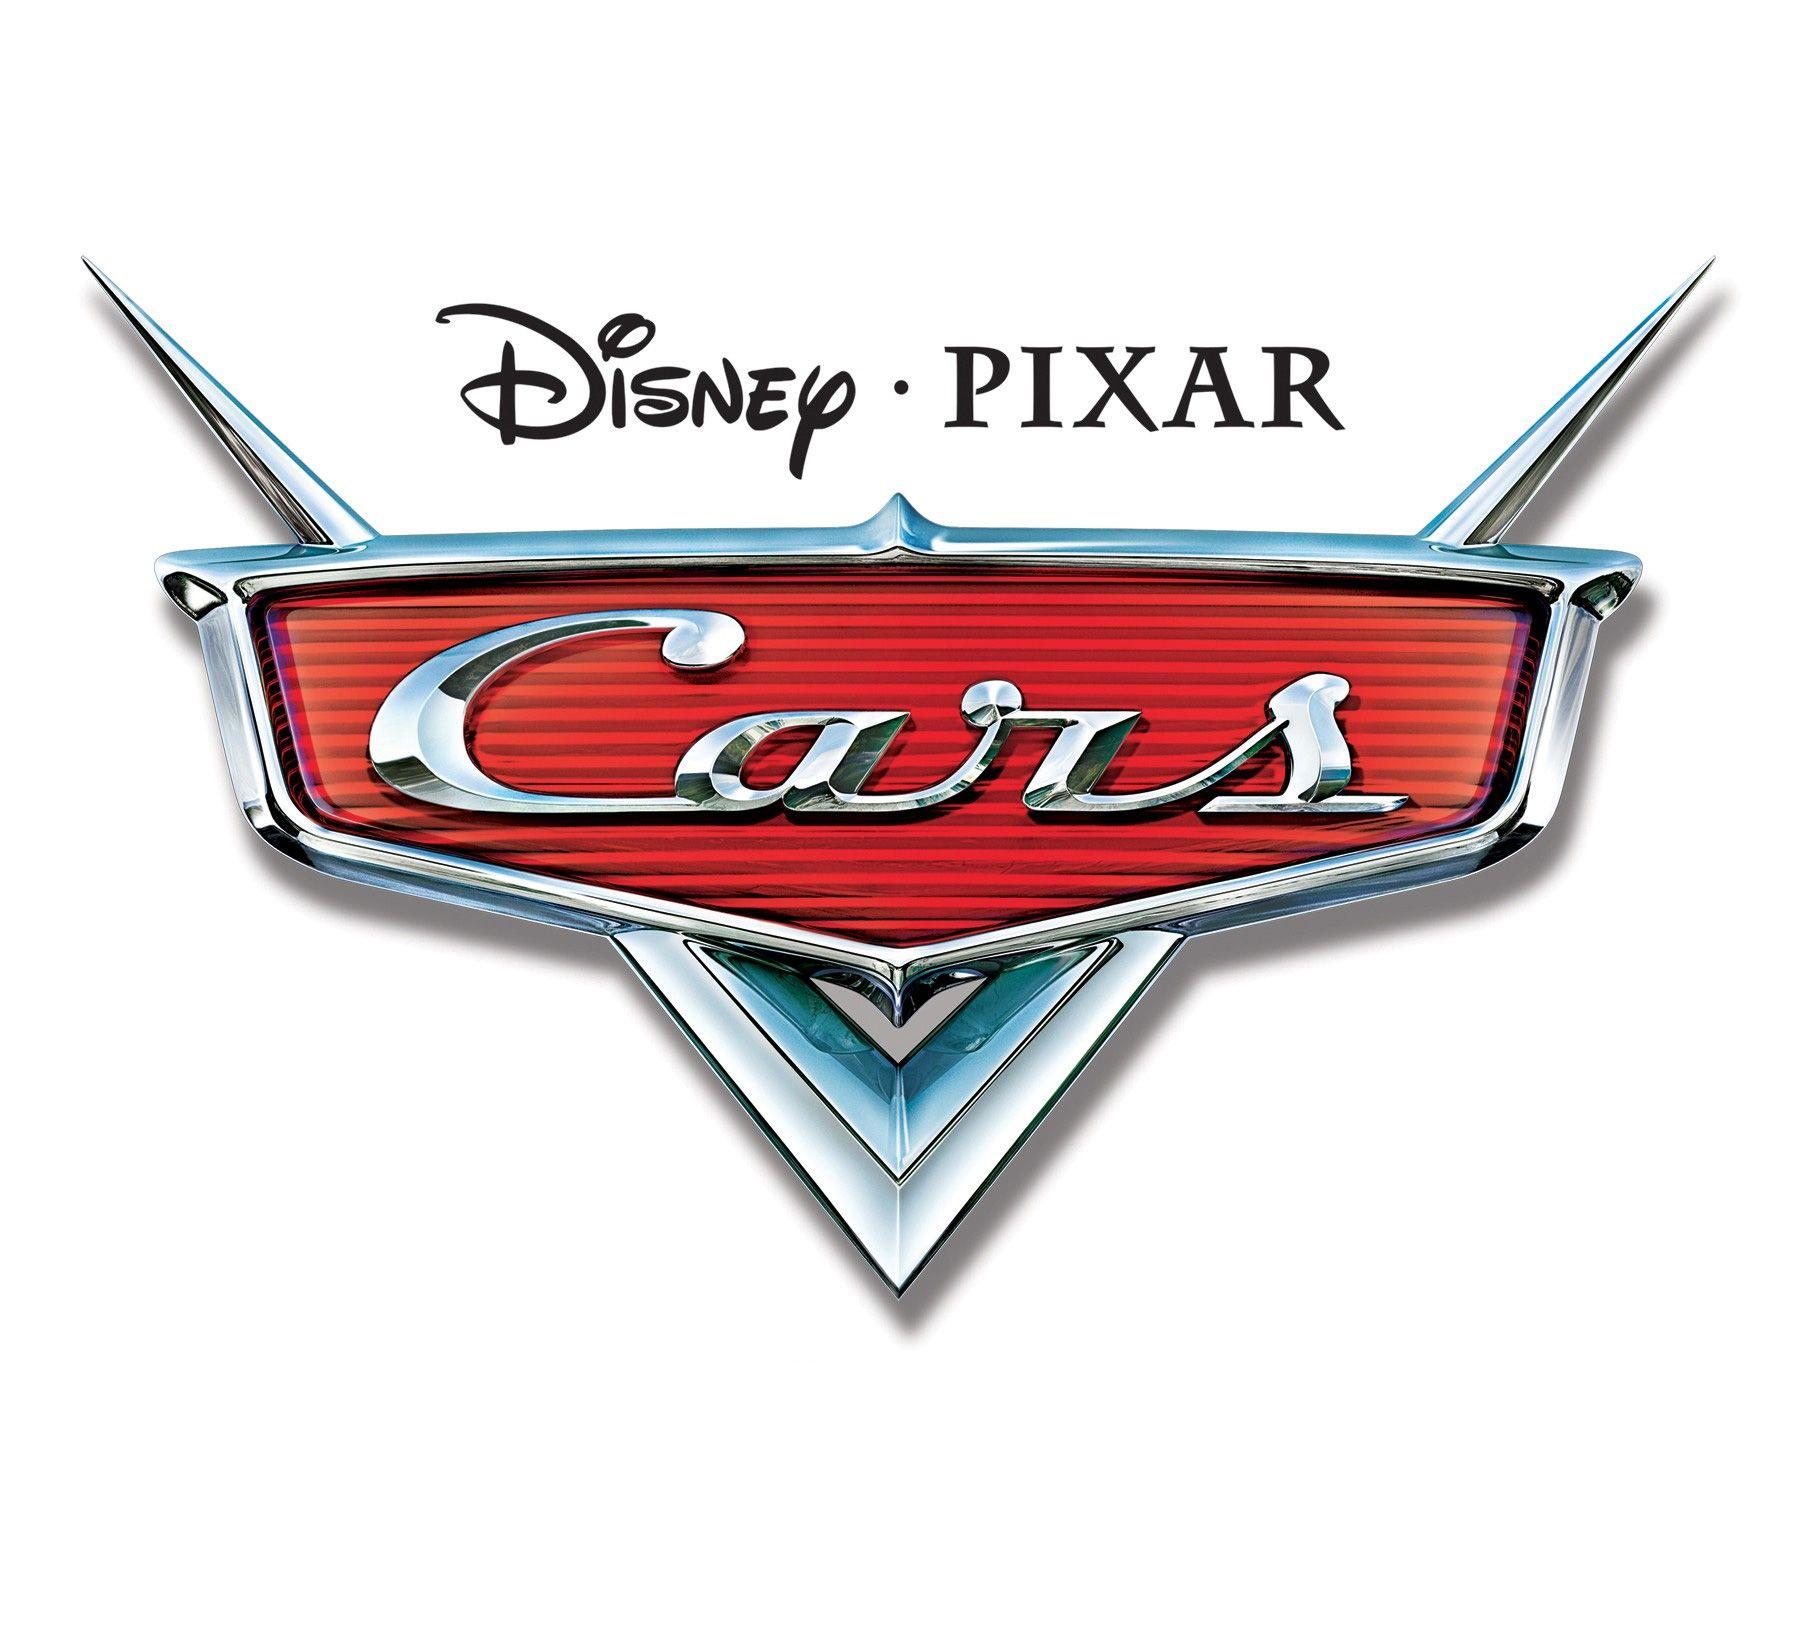 Pixar Movie Logo - Cars (2006 film) logo - Fonts In Use